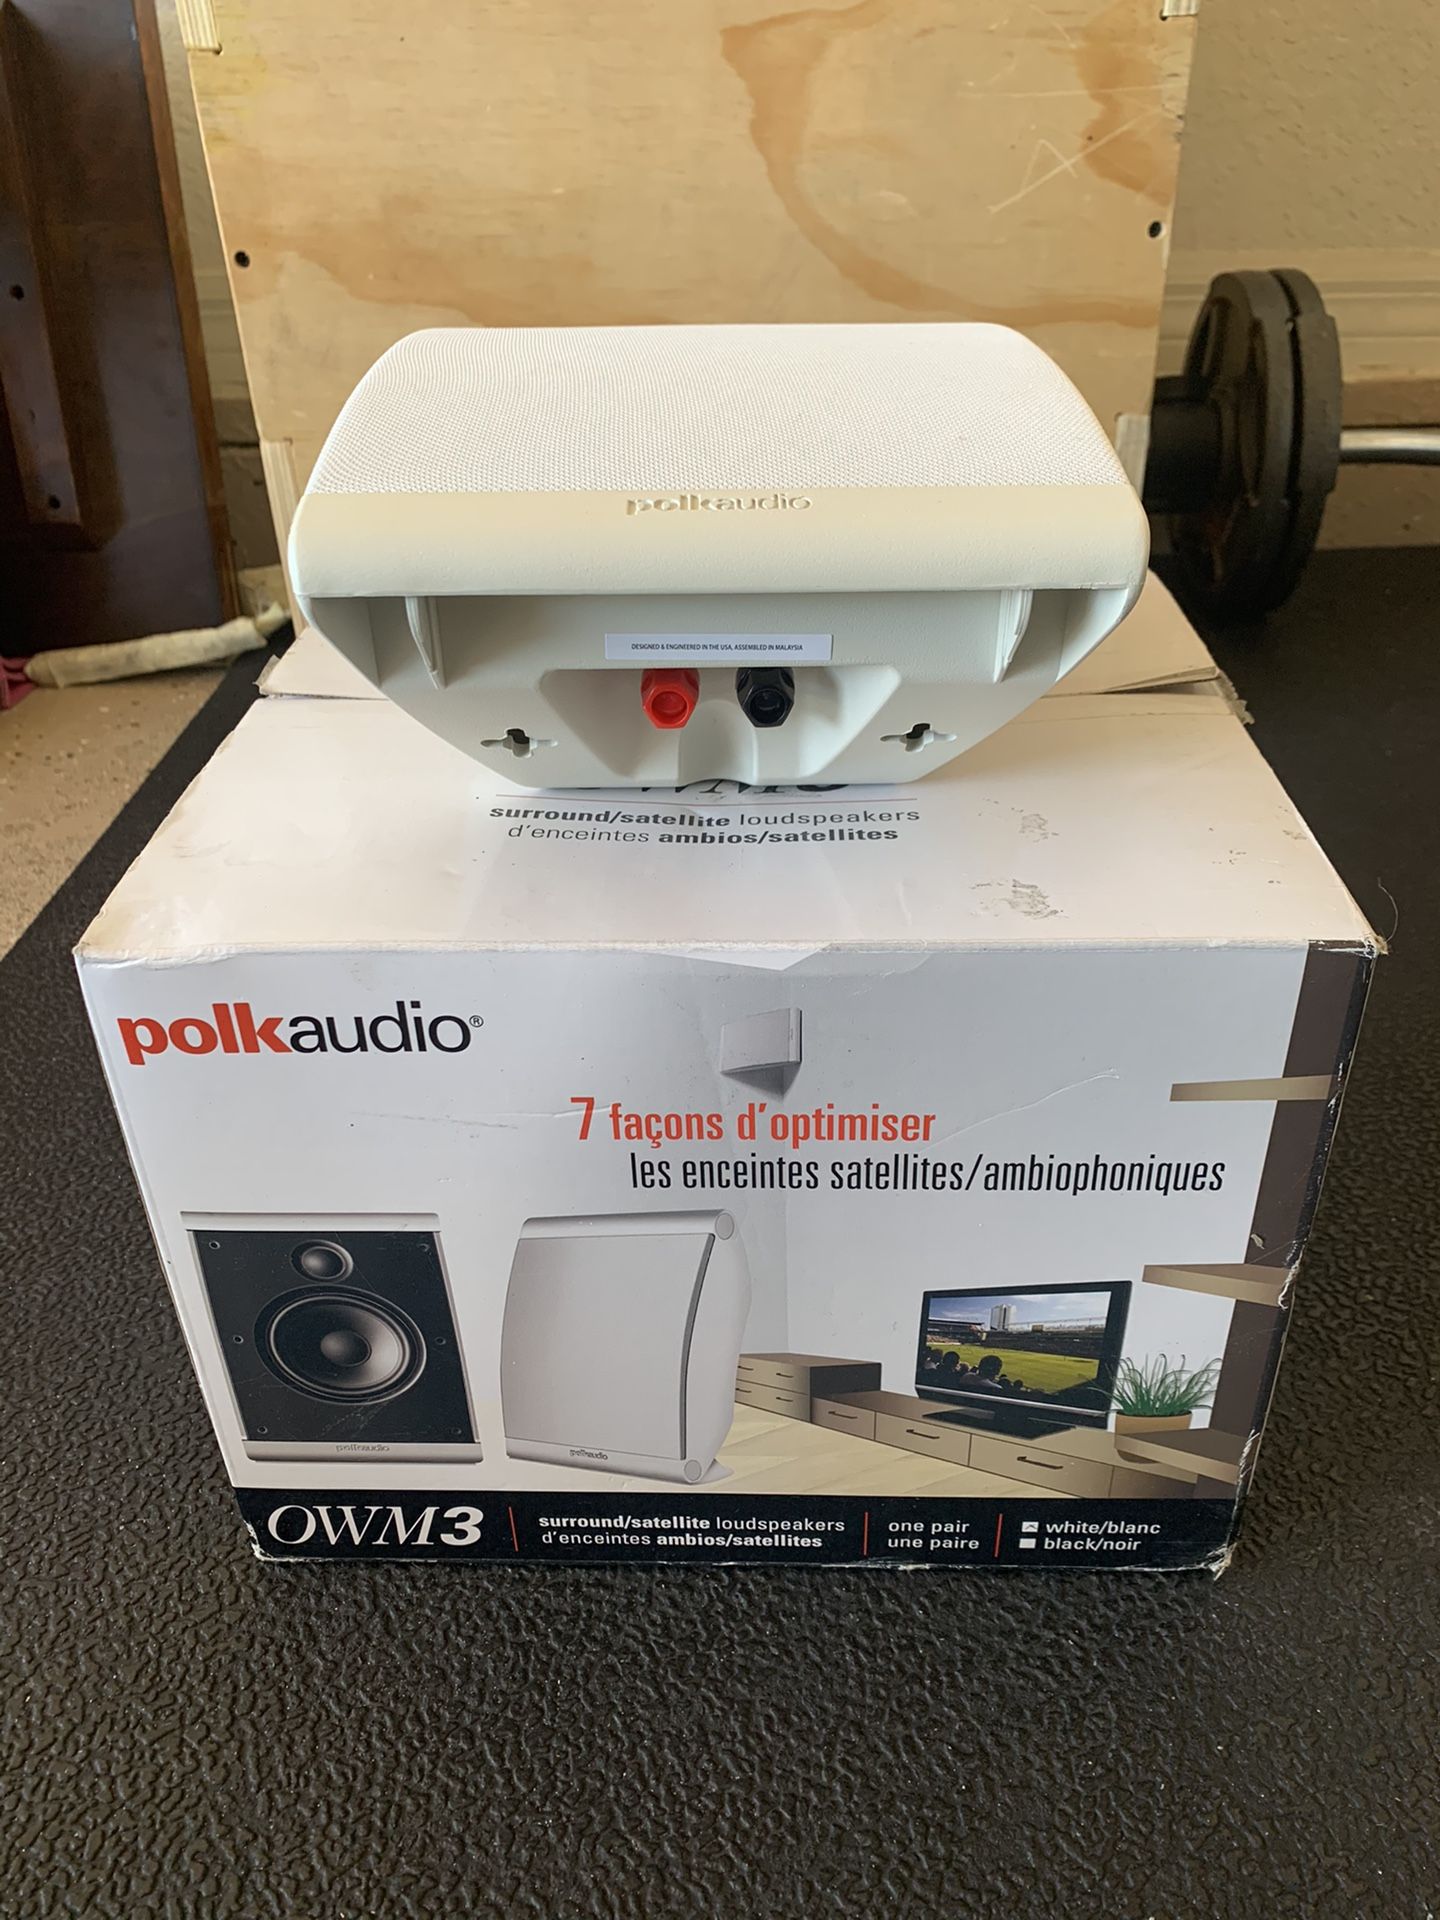 Polk audio OWM3 white bookshelf speakers brand new